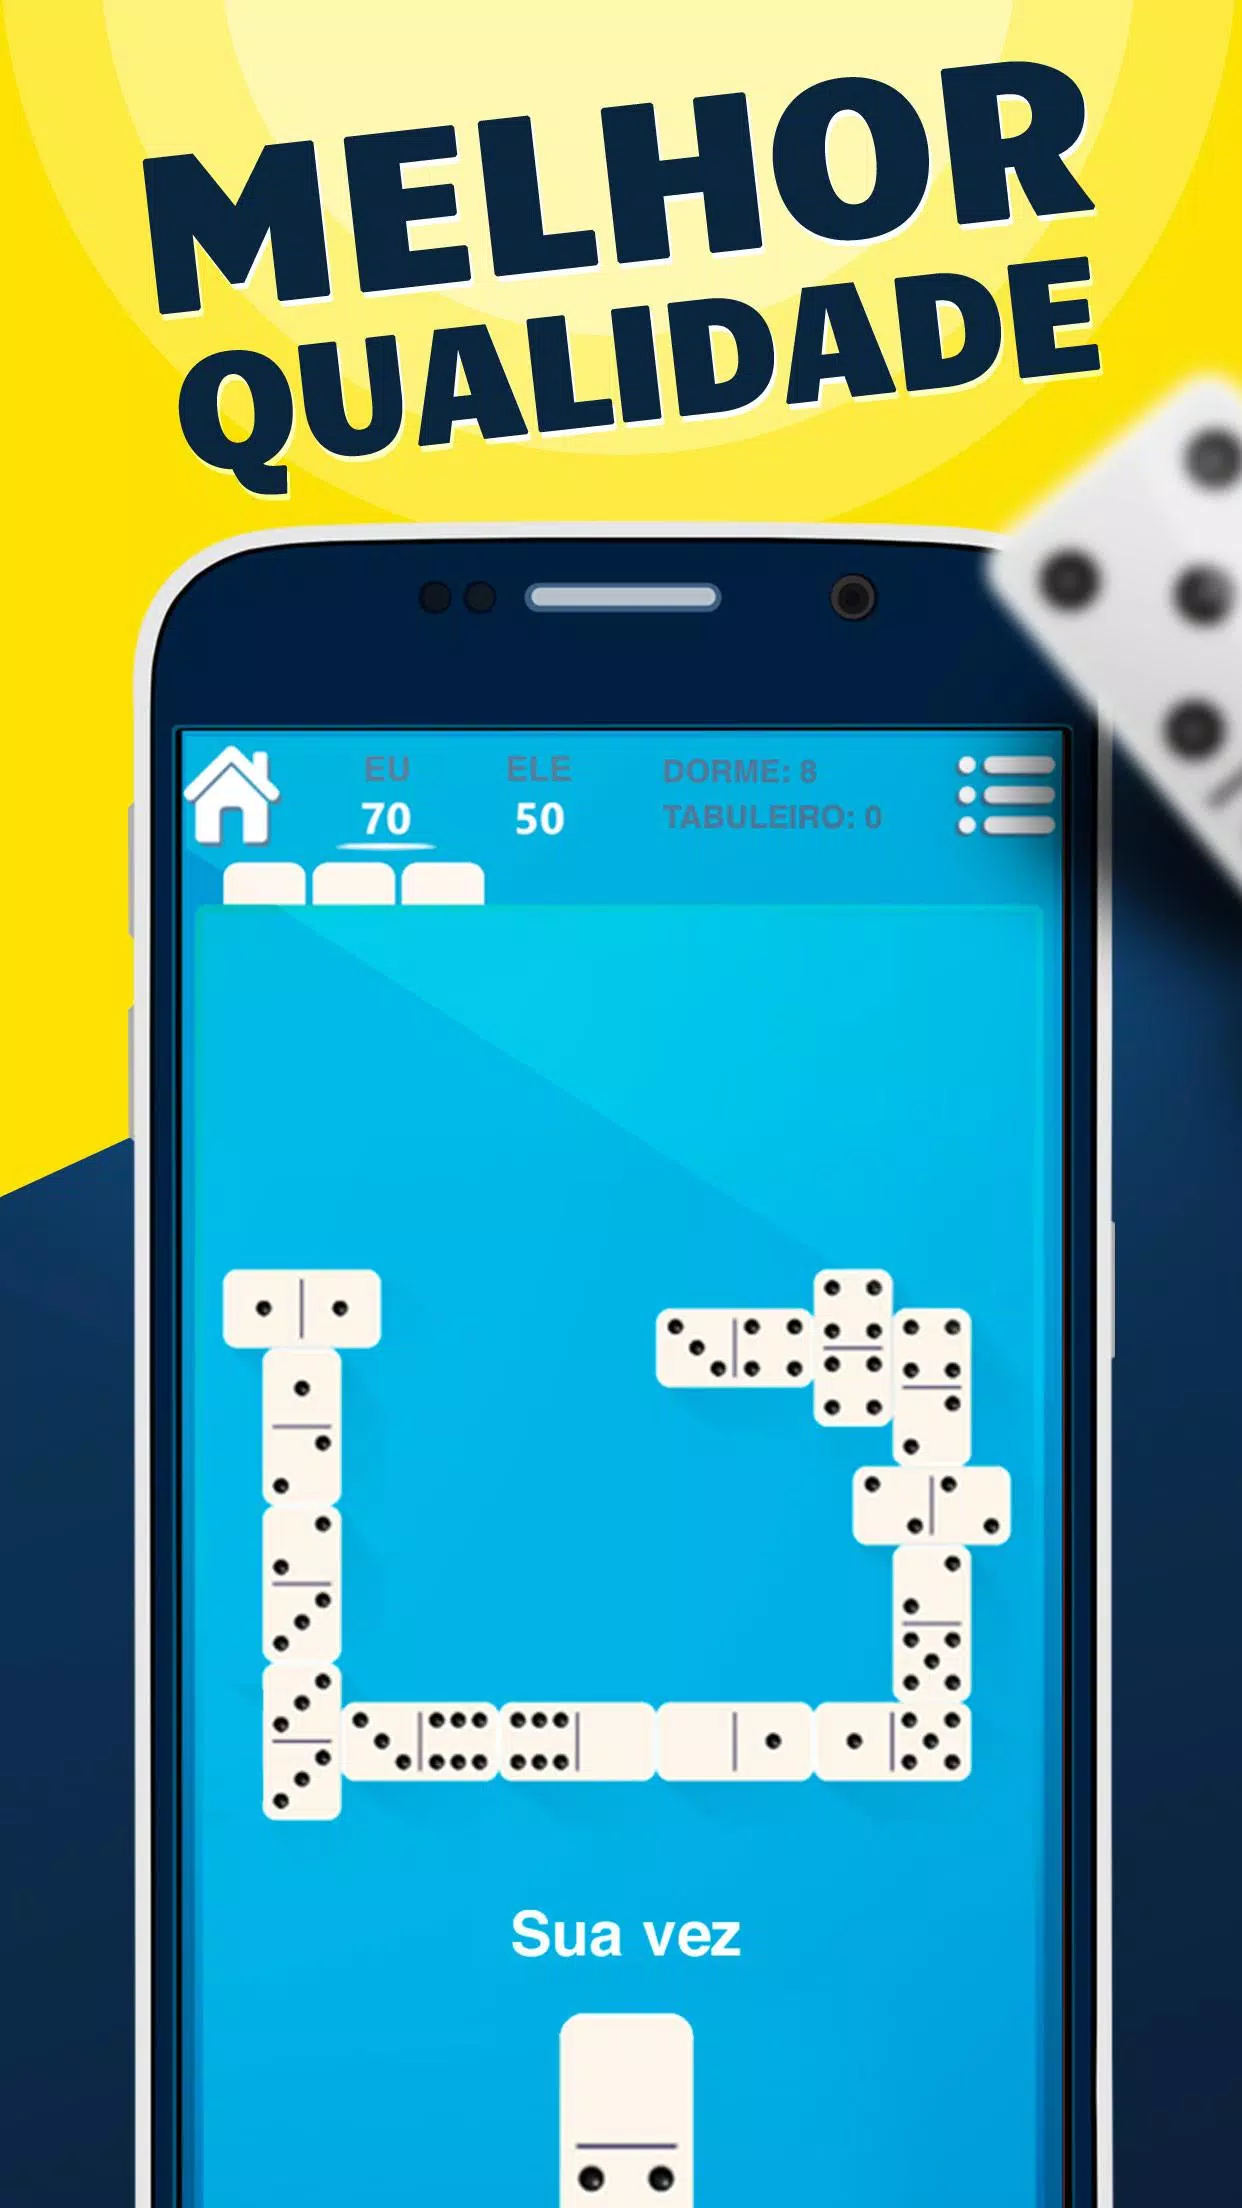 Download do APK de Dominó jogos. Jogue dominó! para Android